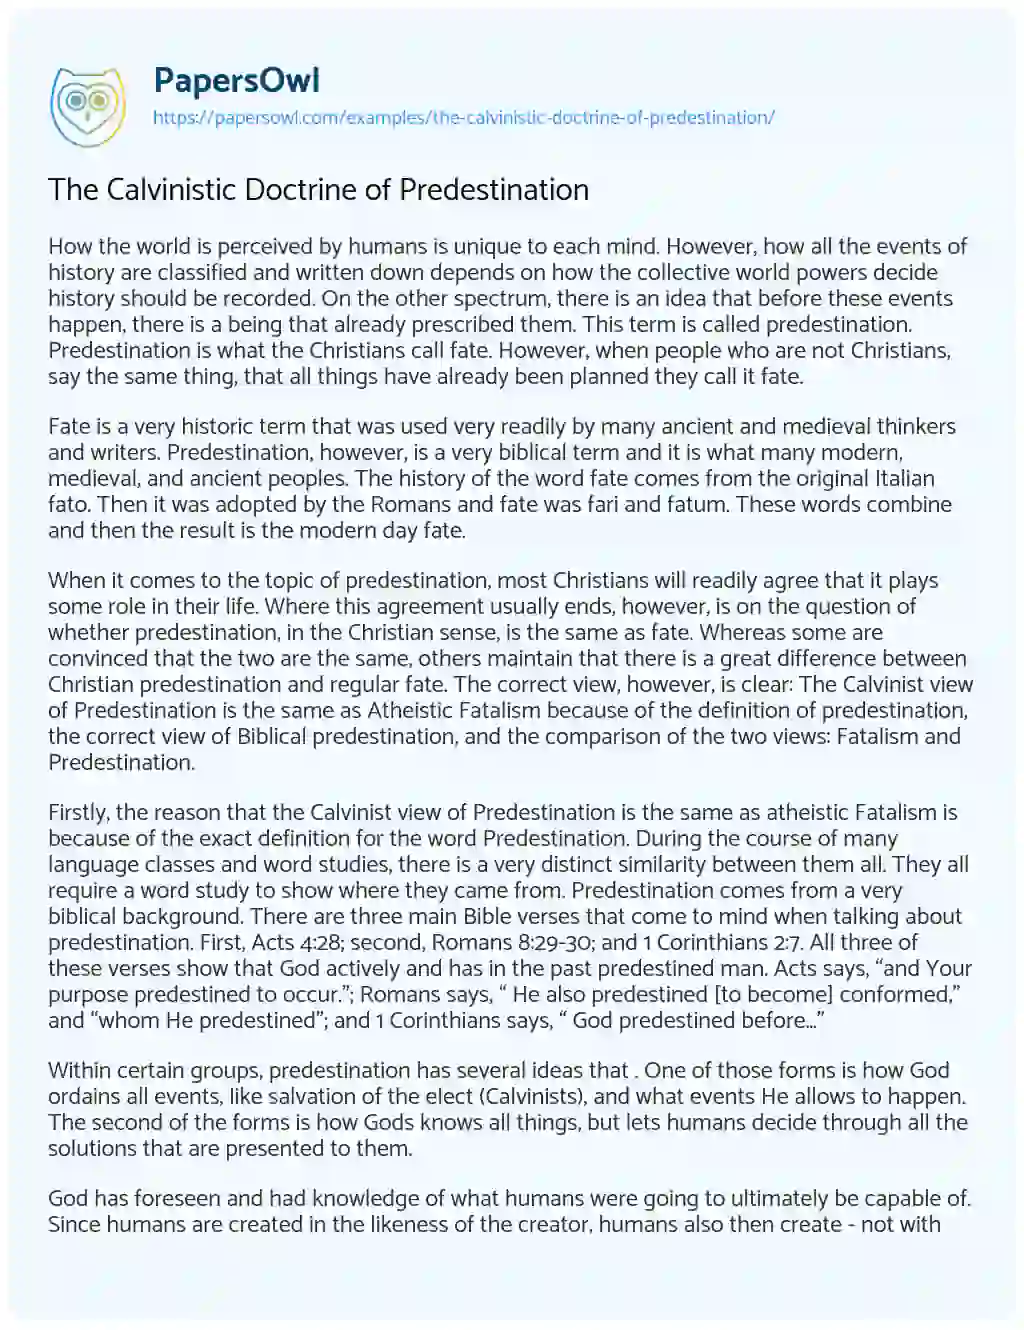 Essay on The Calvinistic Doctrine of Predestination